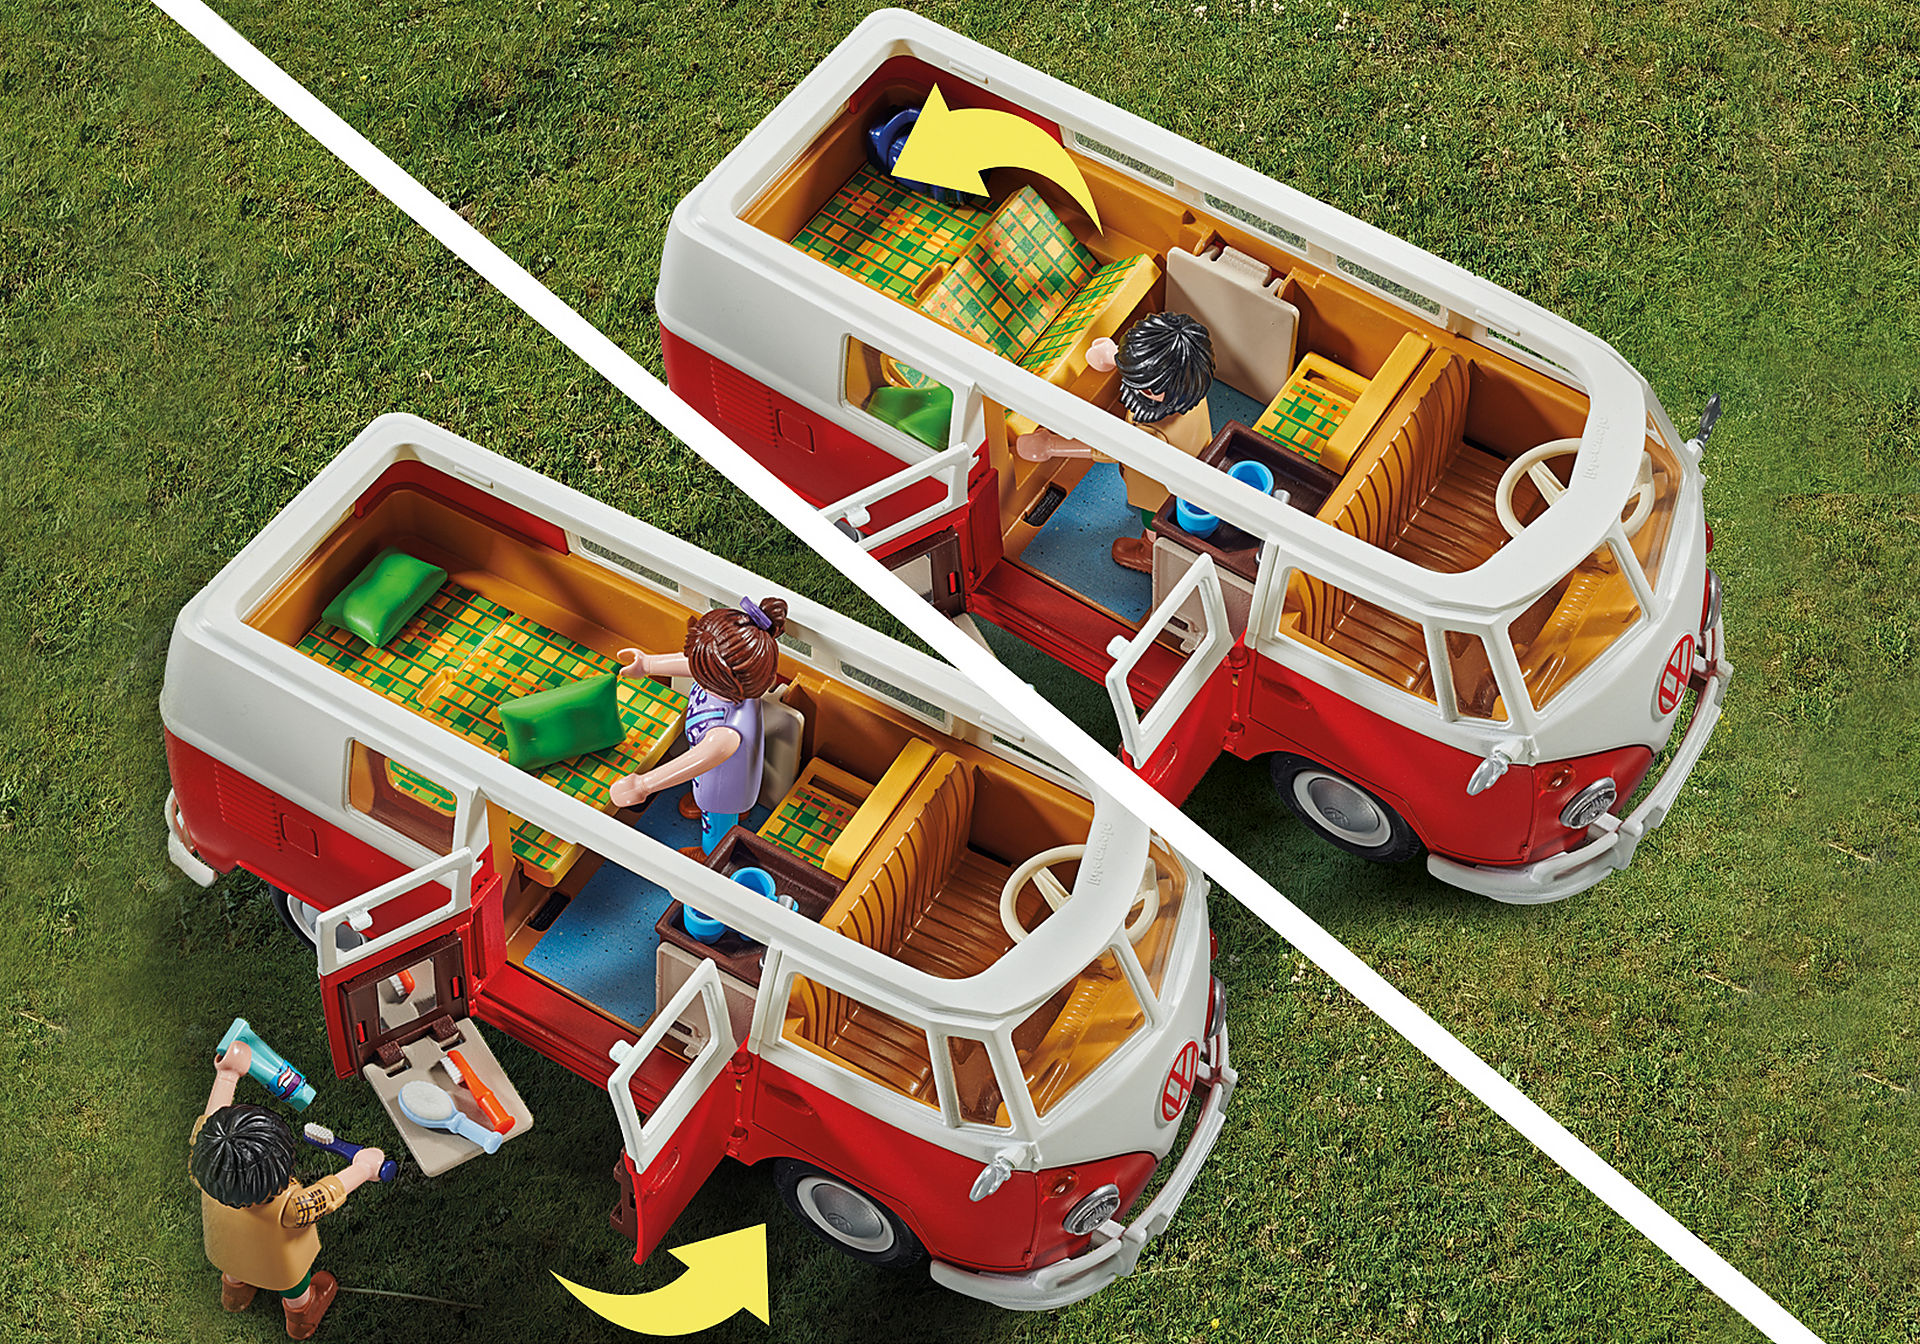 Volkswagen T1 Bulli Camping Bus Playmobil 70176 Urlaubsreise